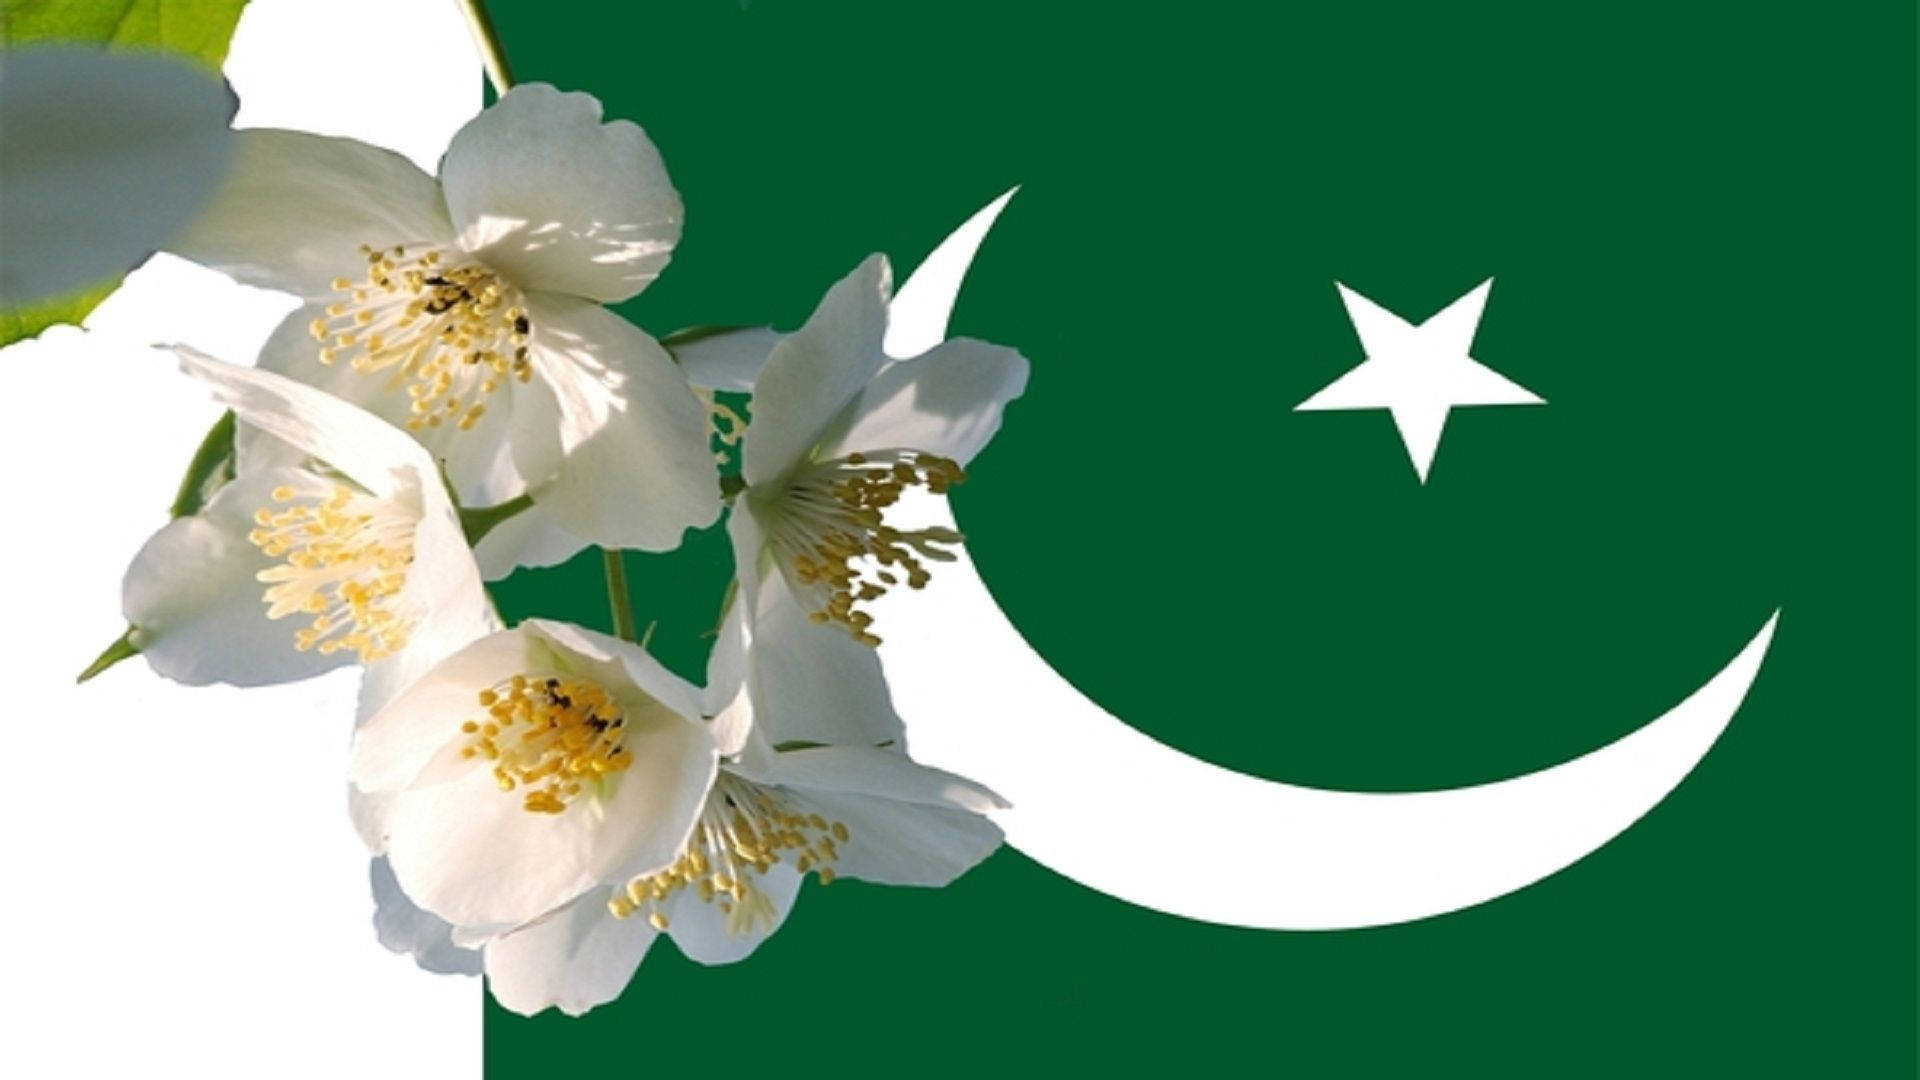 Caption: Vibrant Floral Emblem of Pakistan Wallpaper